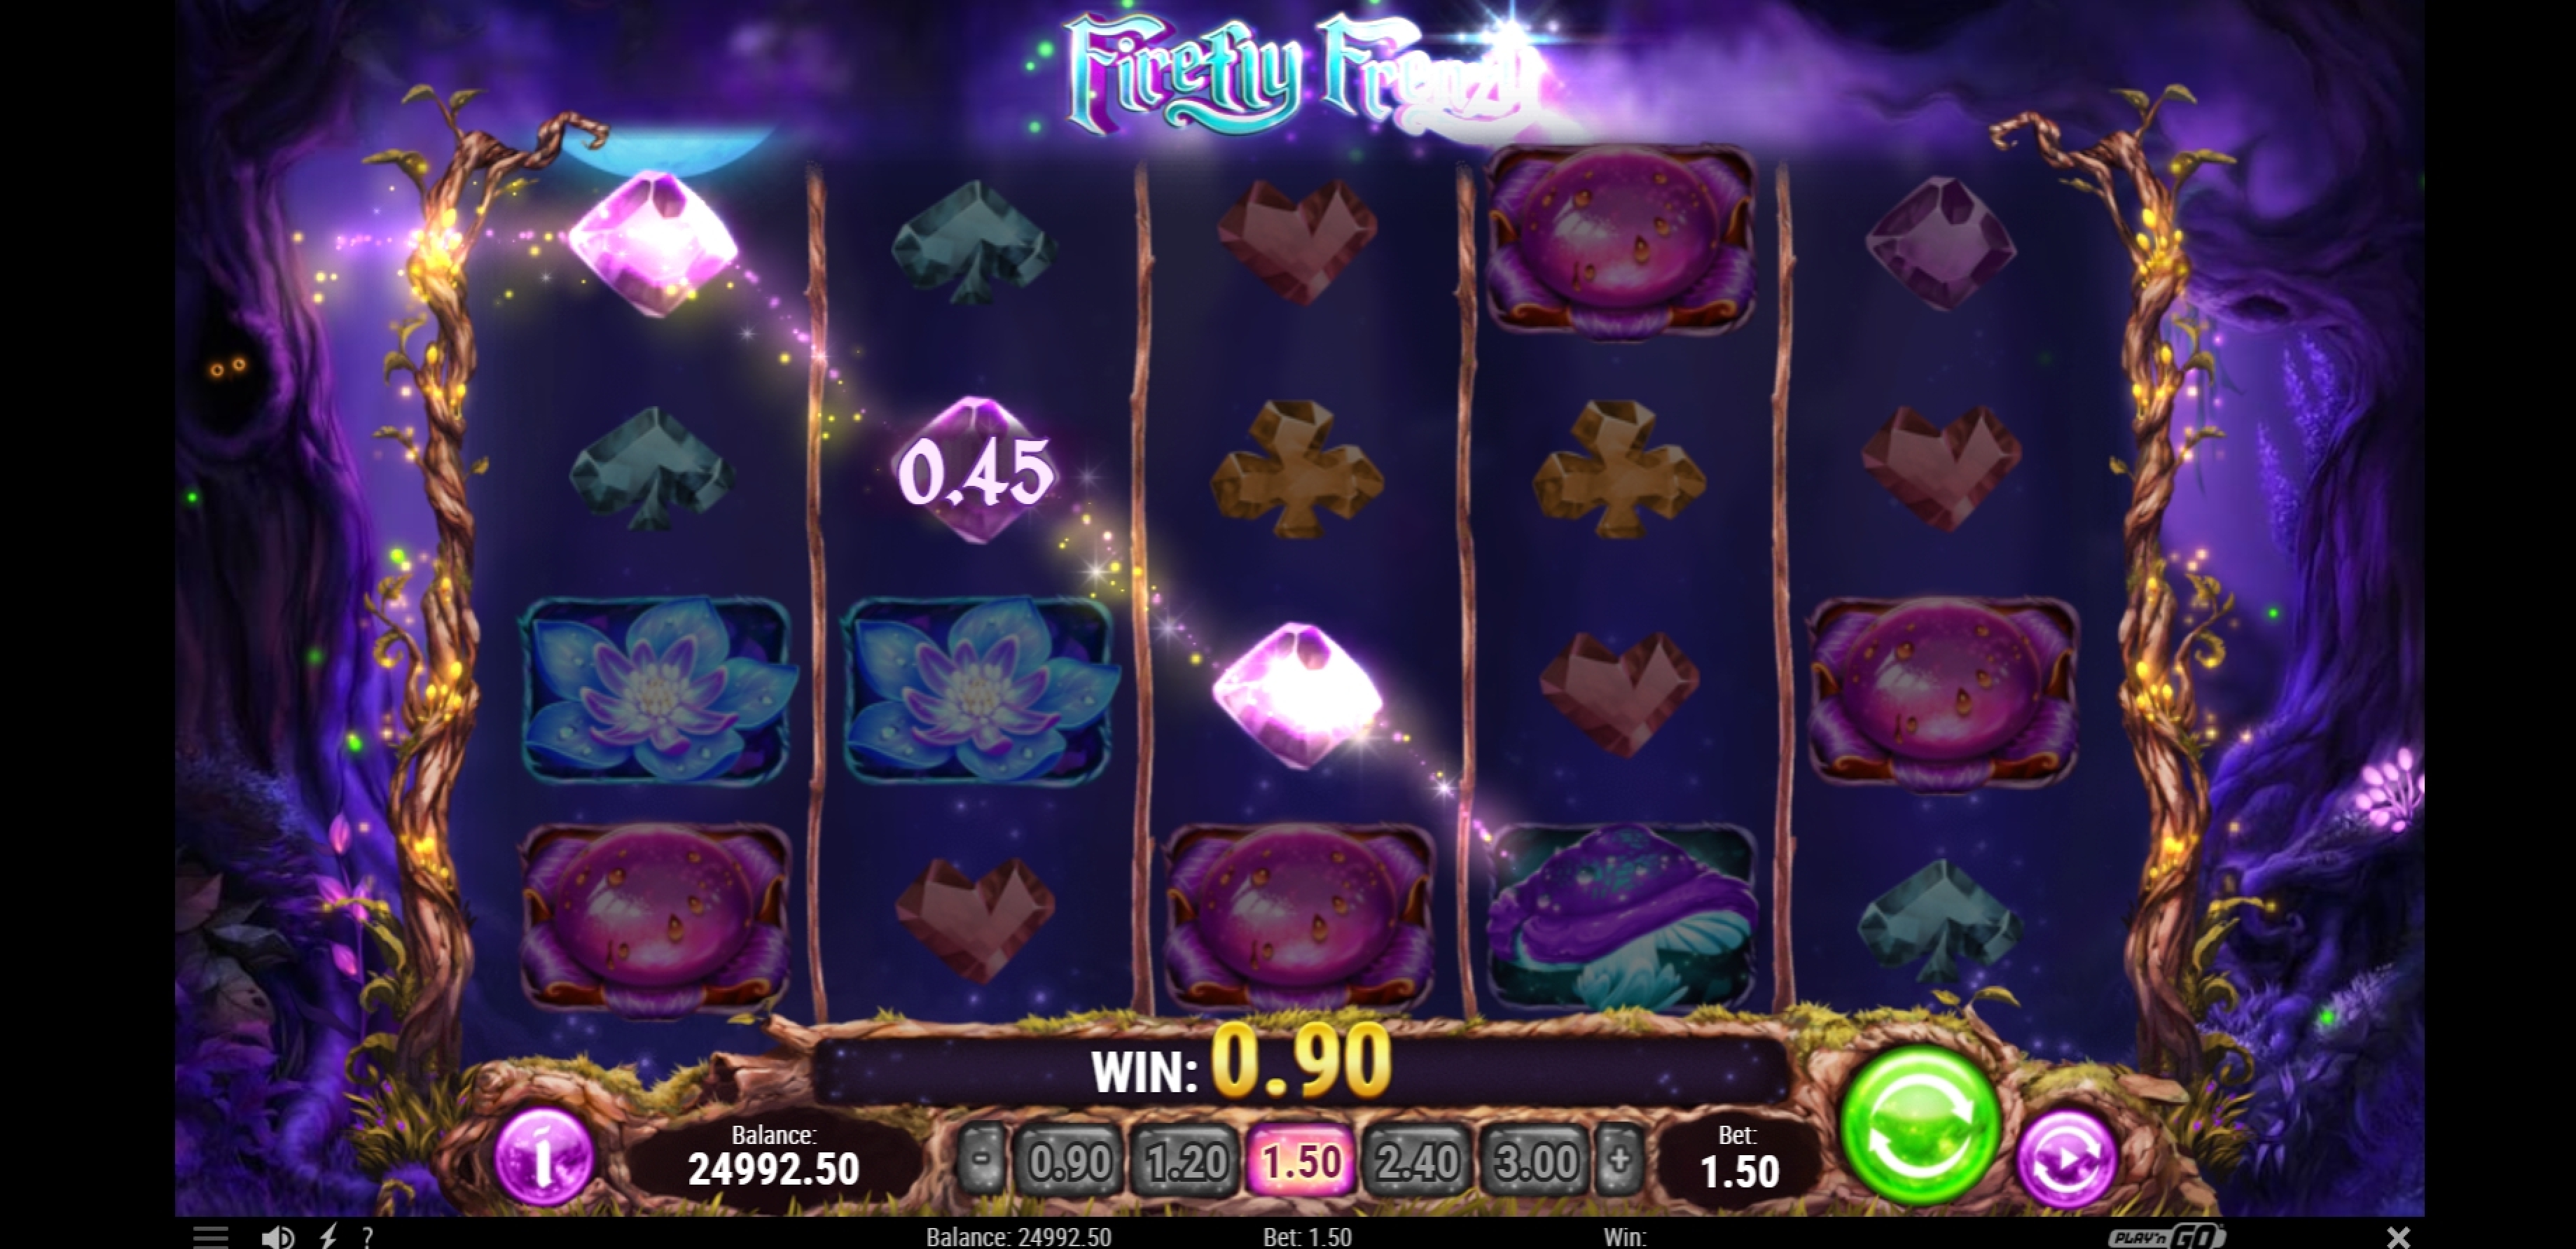 Win Money in Firefly Frenzy Free Slot Game by Playn GO